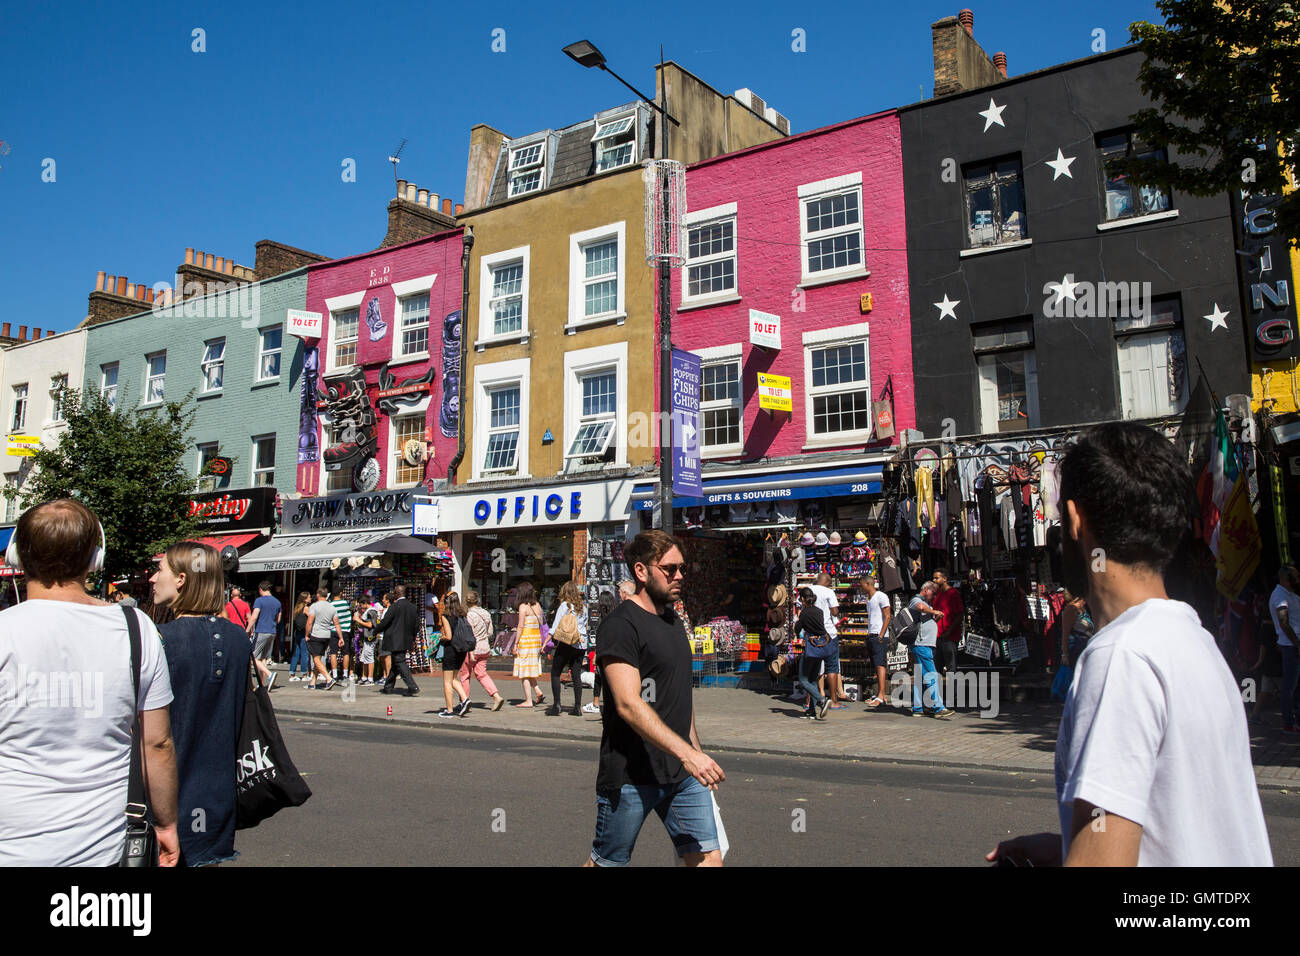 London, England. 26th August 2016. Camden High Street, London. Stock Photo